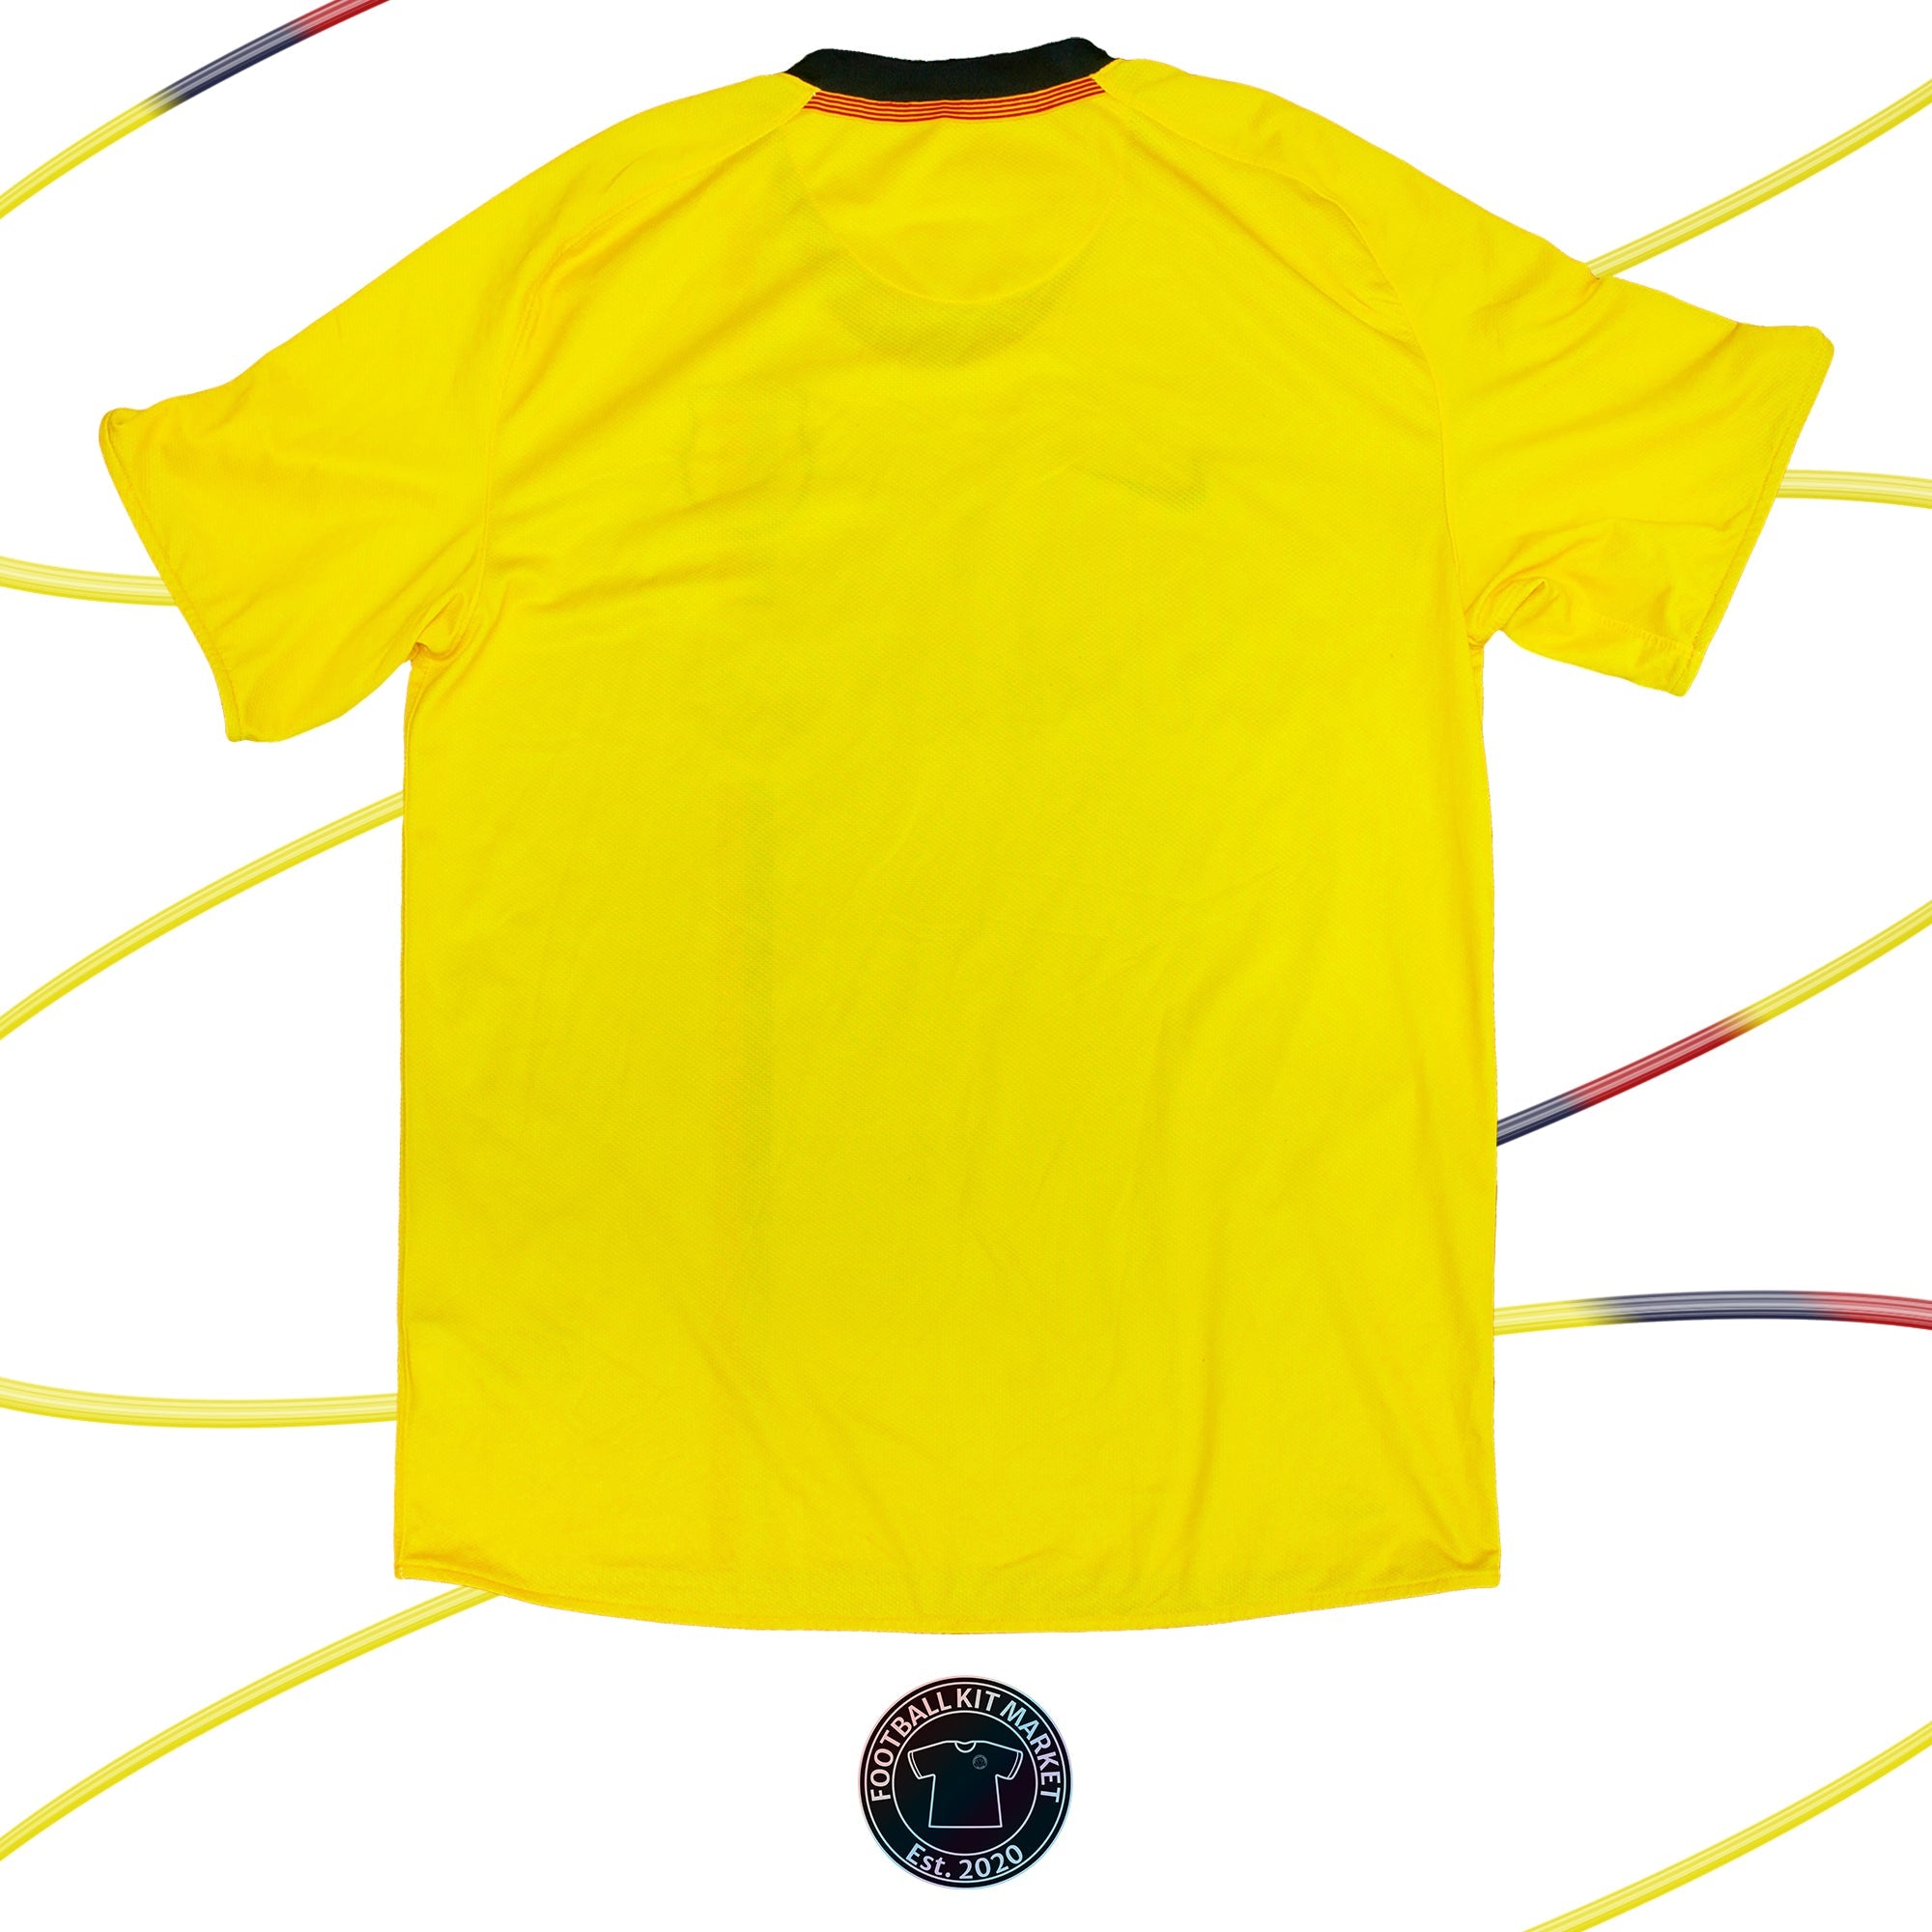 Genuine BARCELONA Away Shirt (2008-2010) - NIKE (L) - Product Image from Football Kit Market